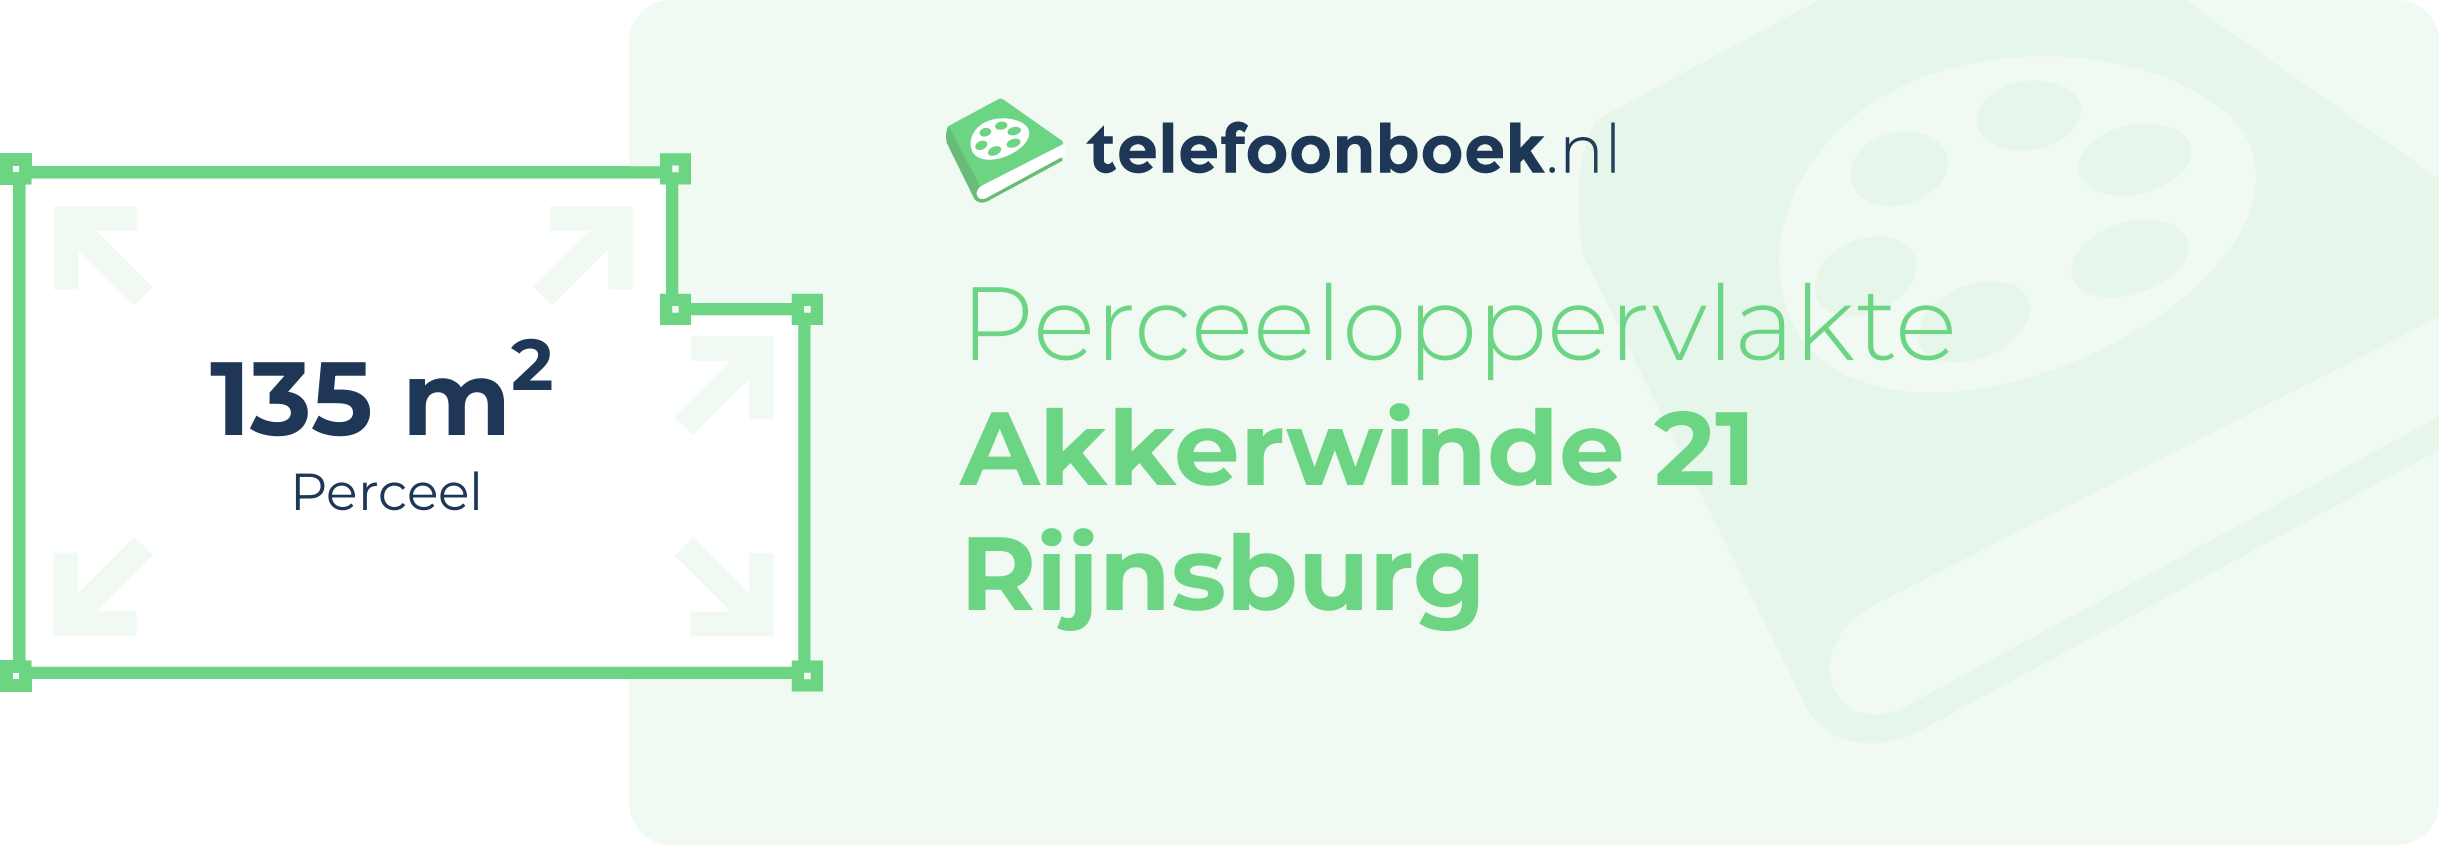 Perceeloppervlakte Akkerwinde 21 Rijnsburg